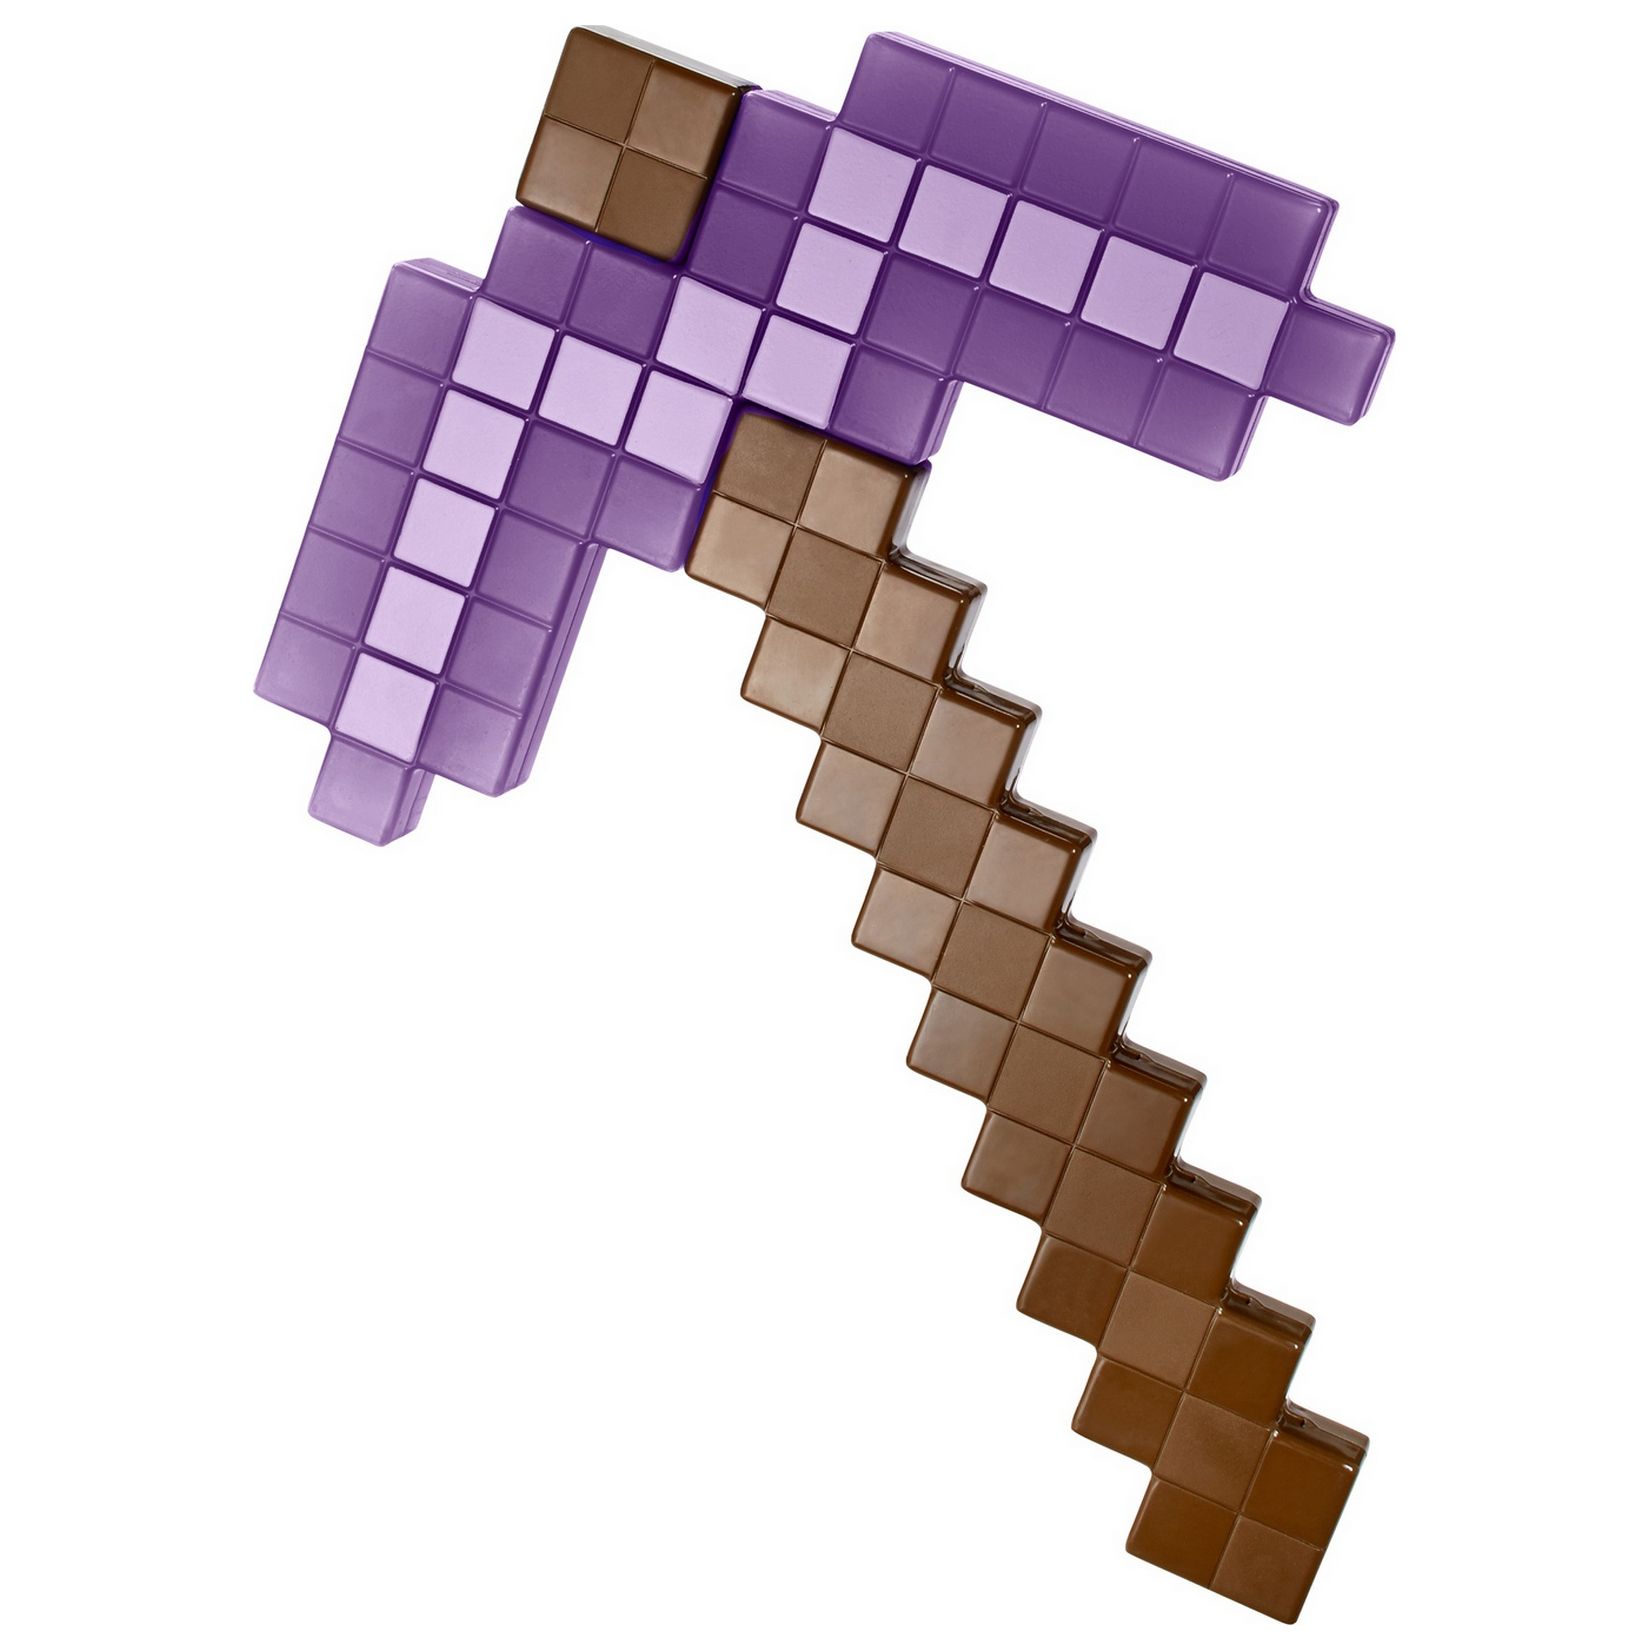 Игрушка Minecraft Кирка HFF60 - фото 3